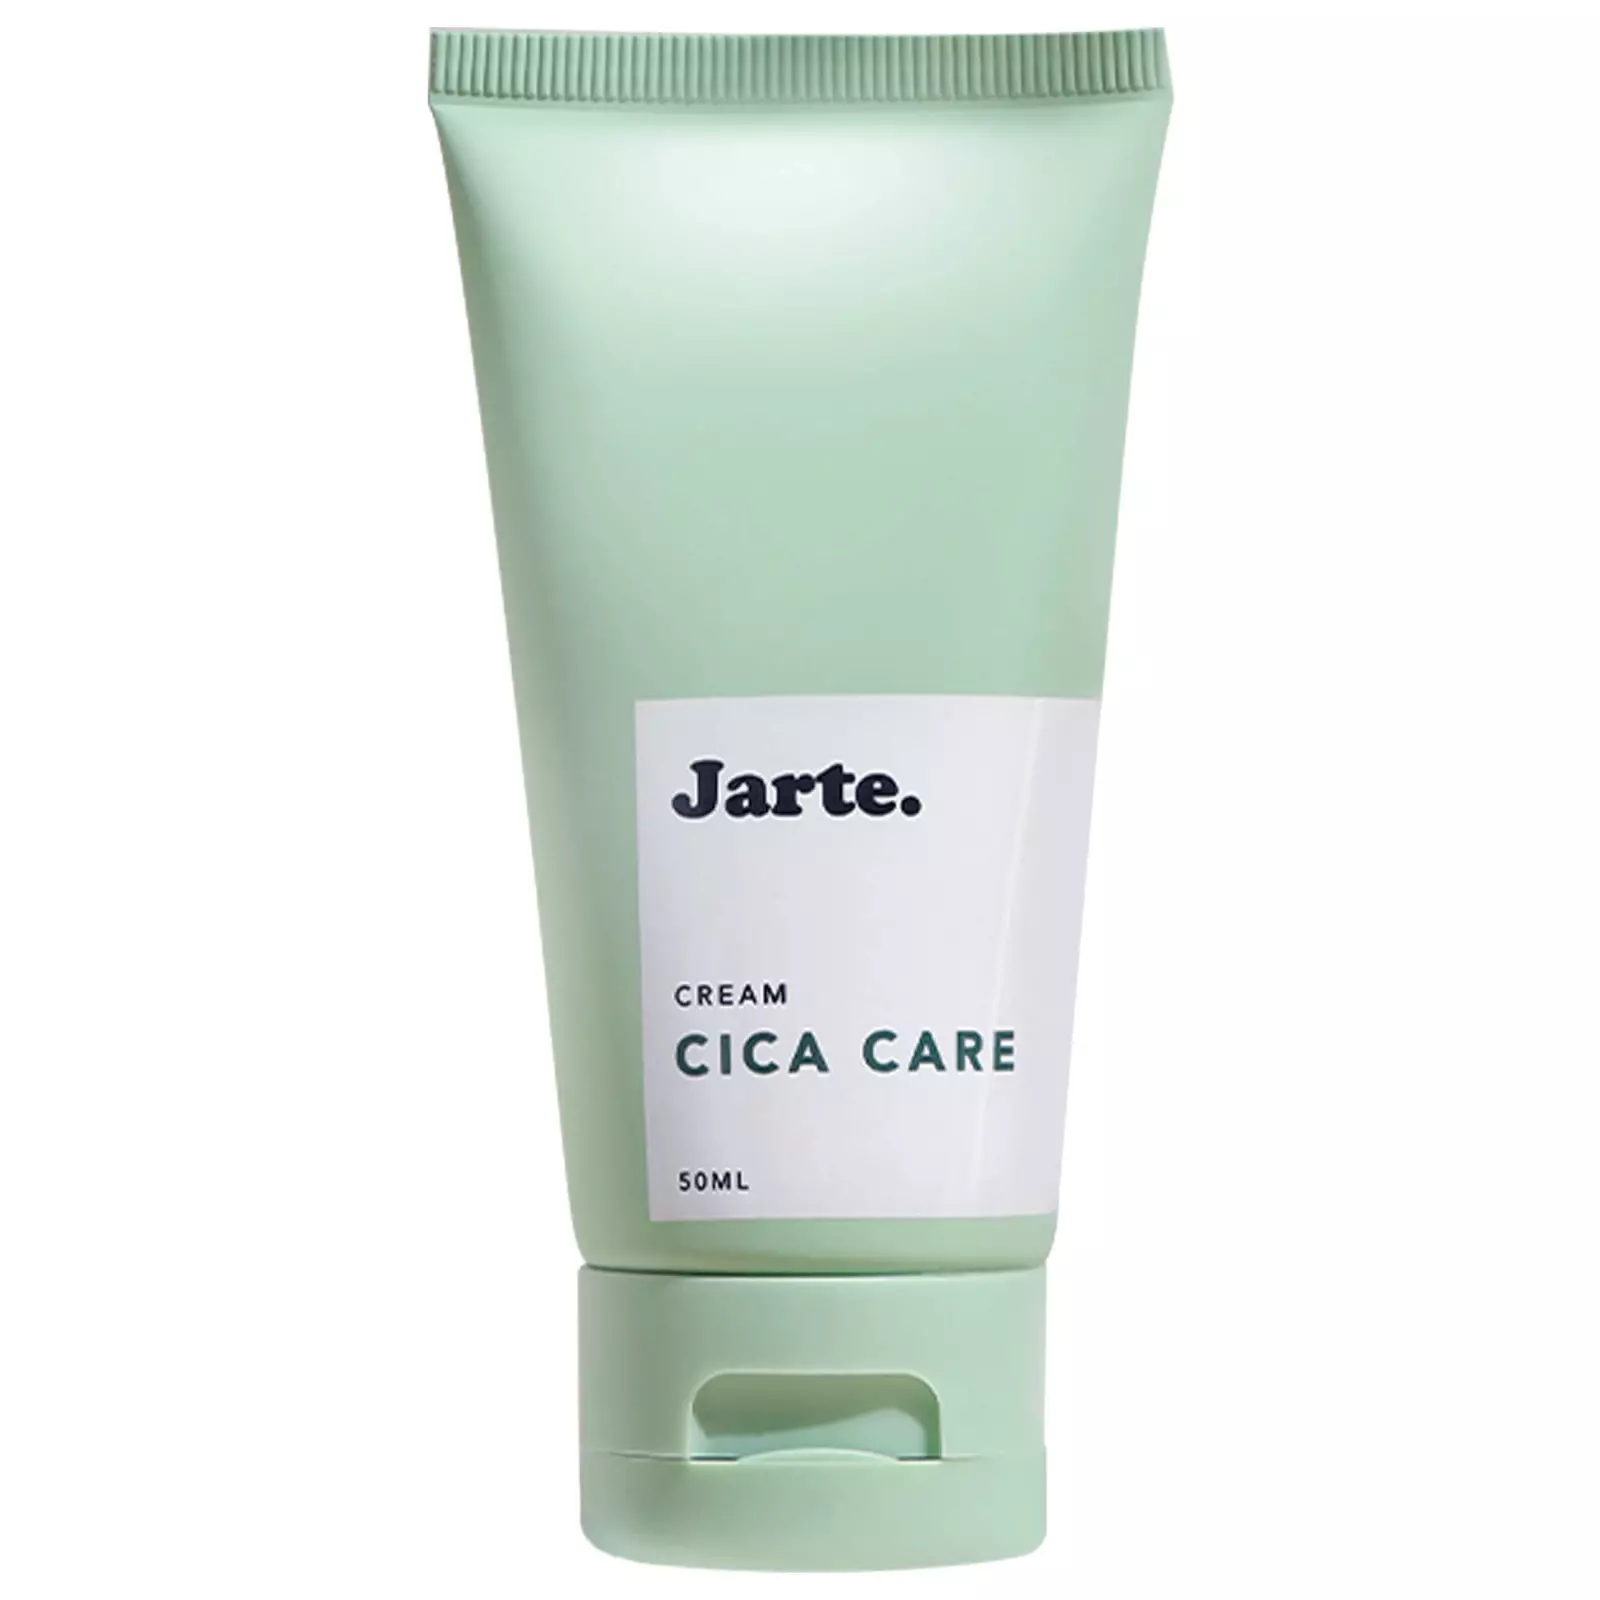 Jarte Cica Care Cream skincare centella asiatica 